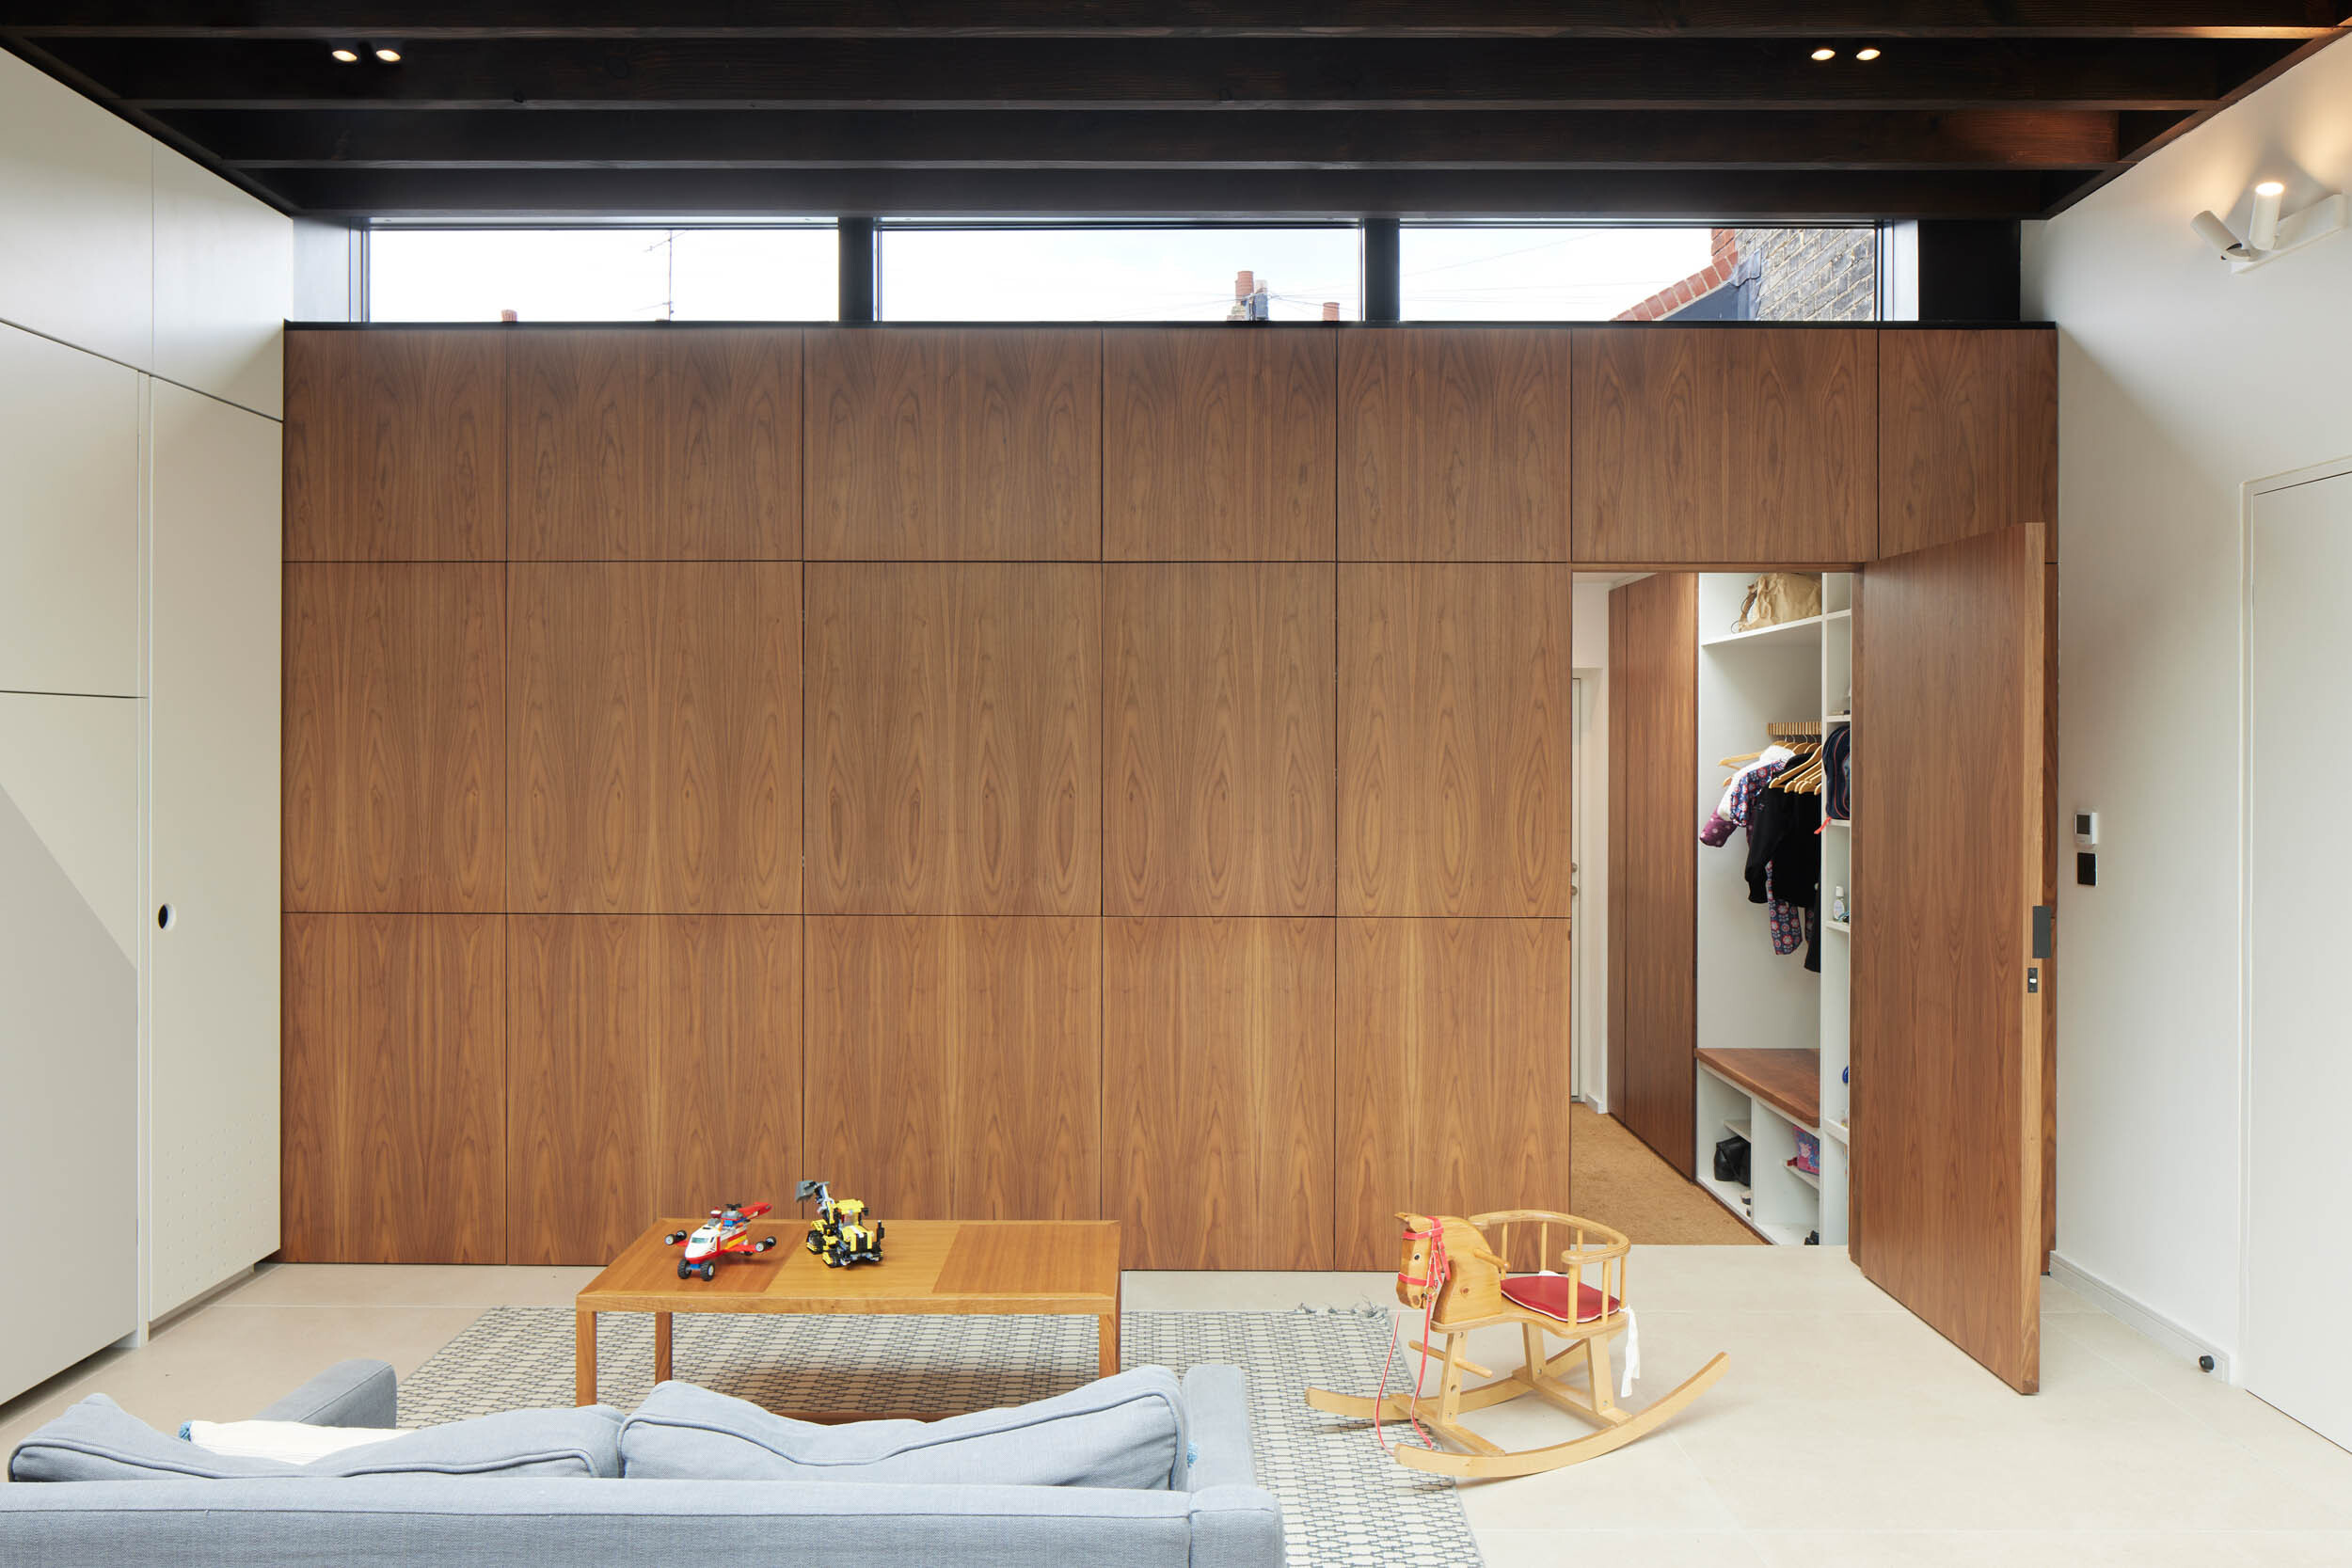 concealed tv behind walnut veneered panels 4 | cdc studio cambridge architects